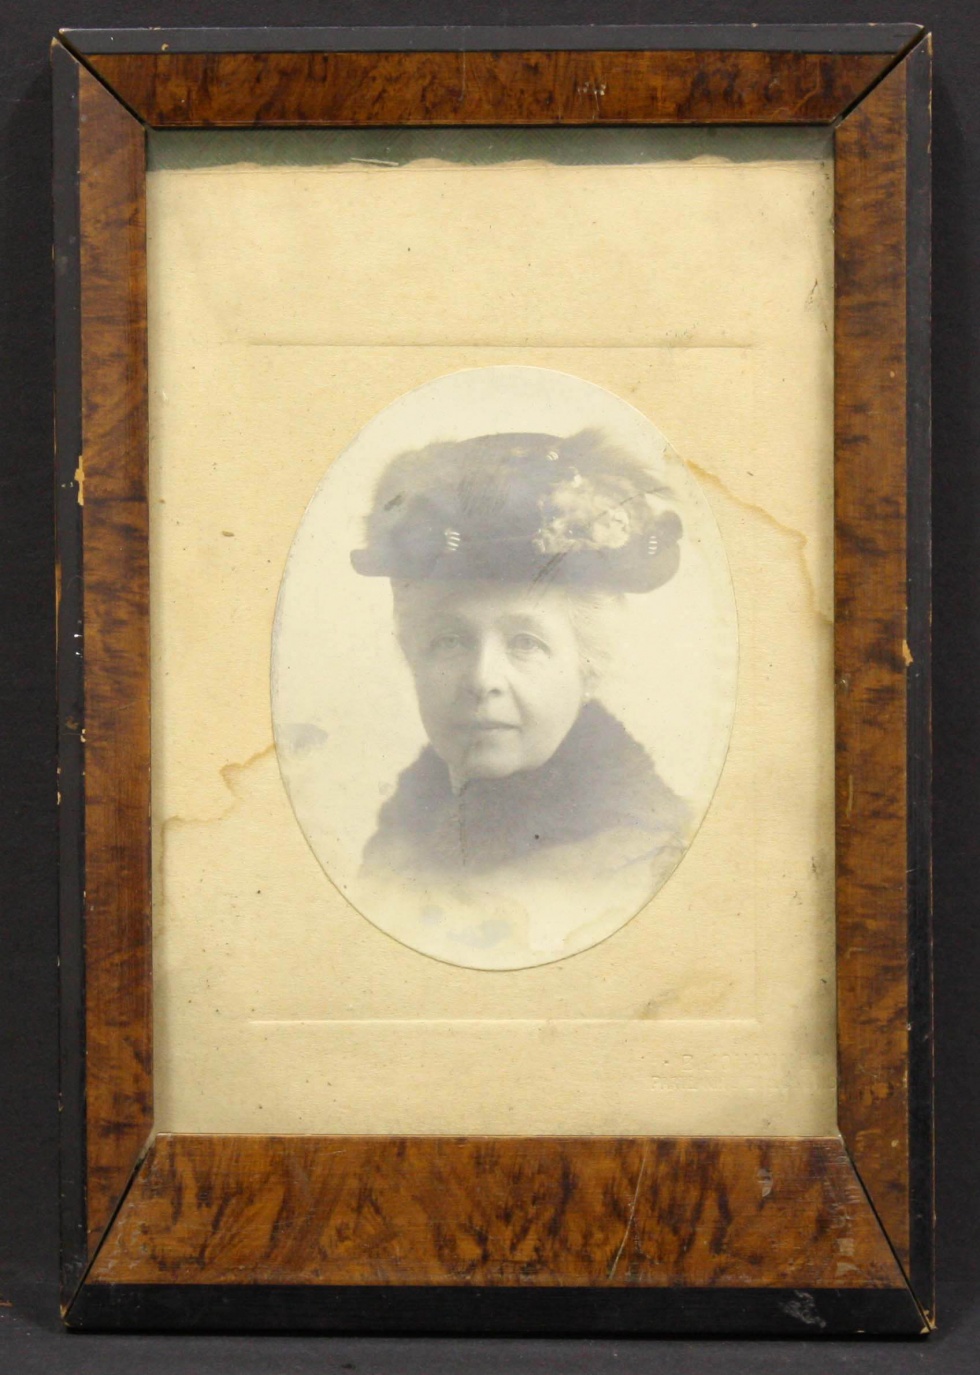 Fotografie, gerahmt, ältere Frau mit Hut (Museum Wolmirstedt RR-F)